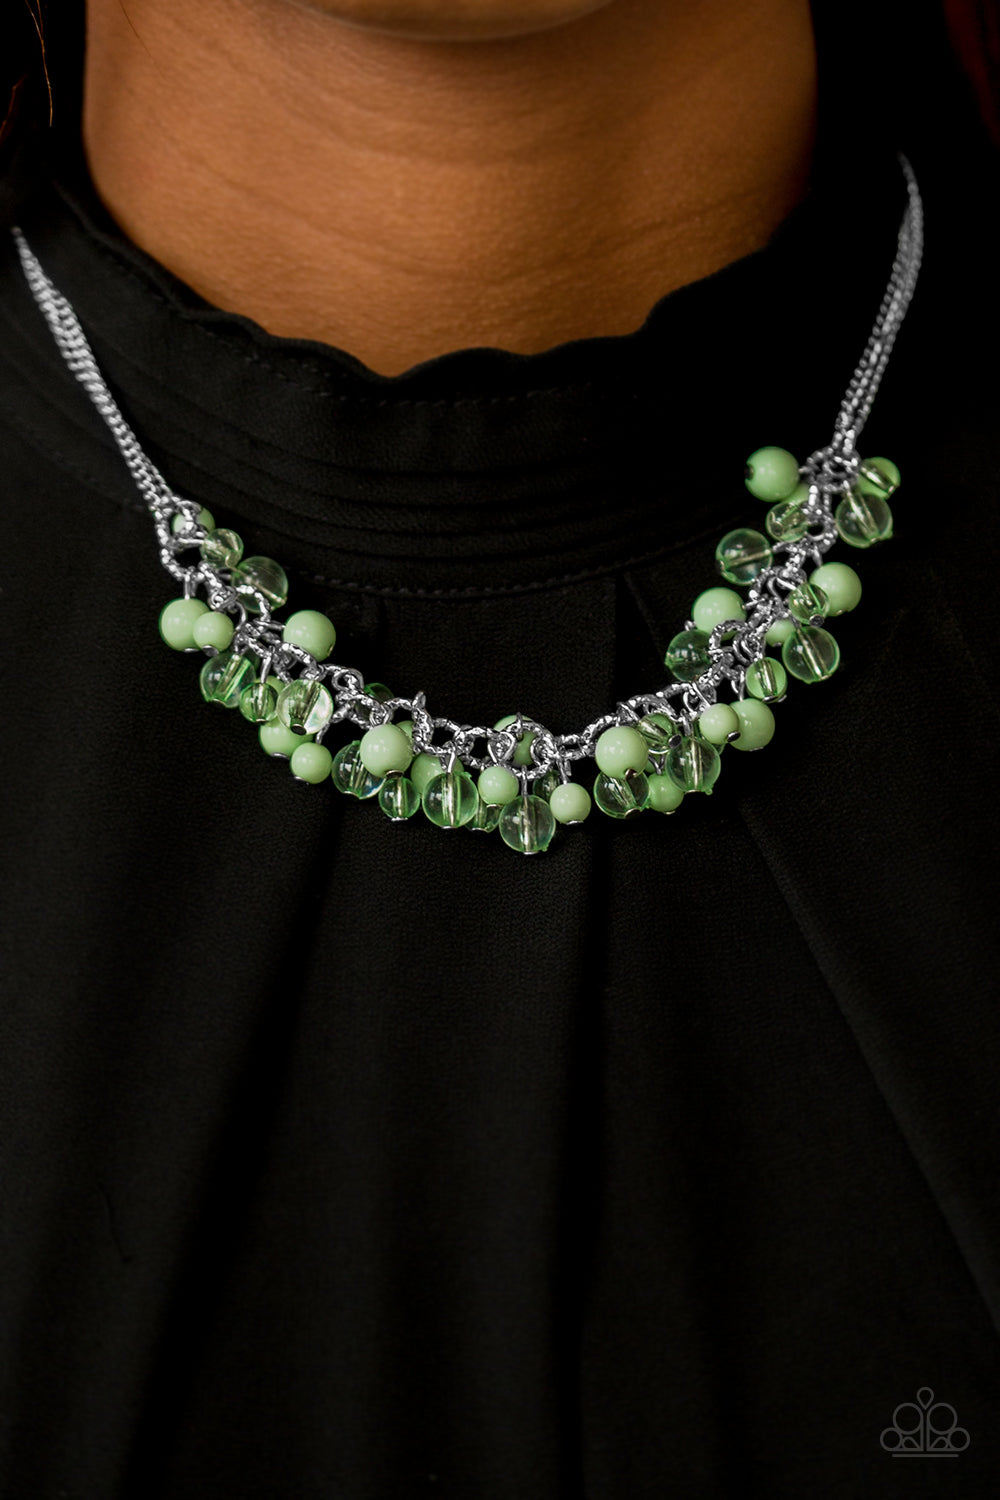 Boulevard Beauty - Green necklace set